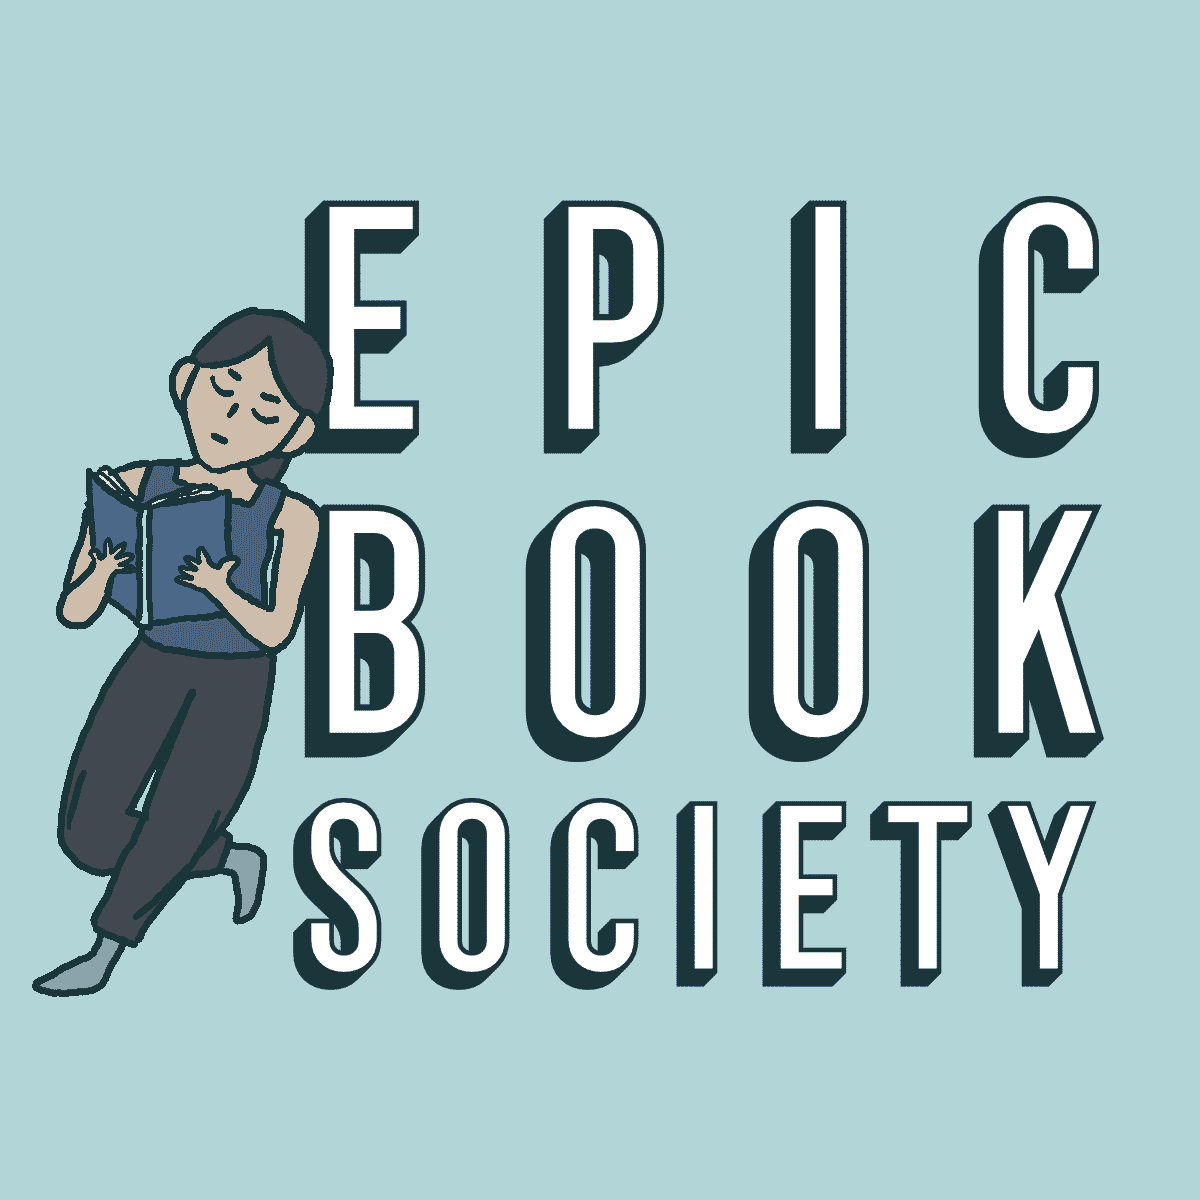 Epic Book Society